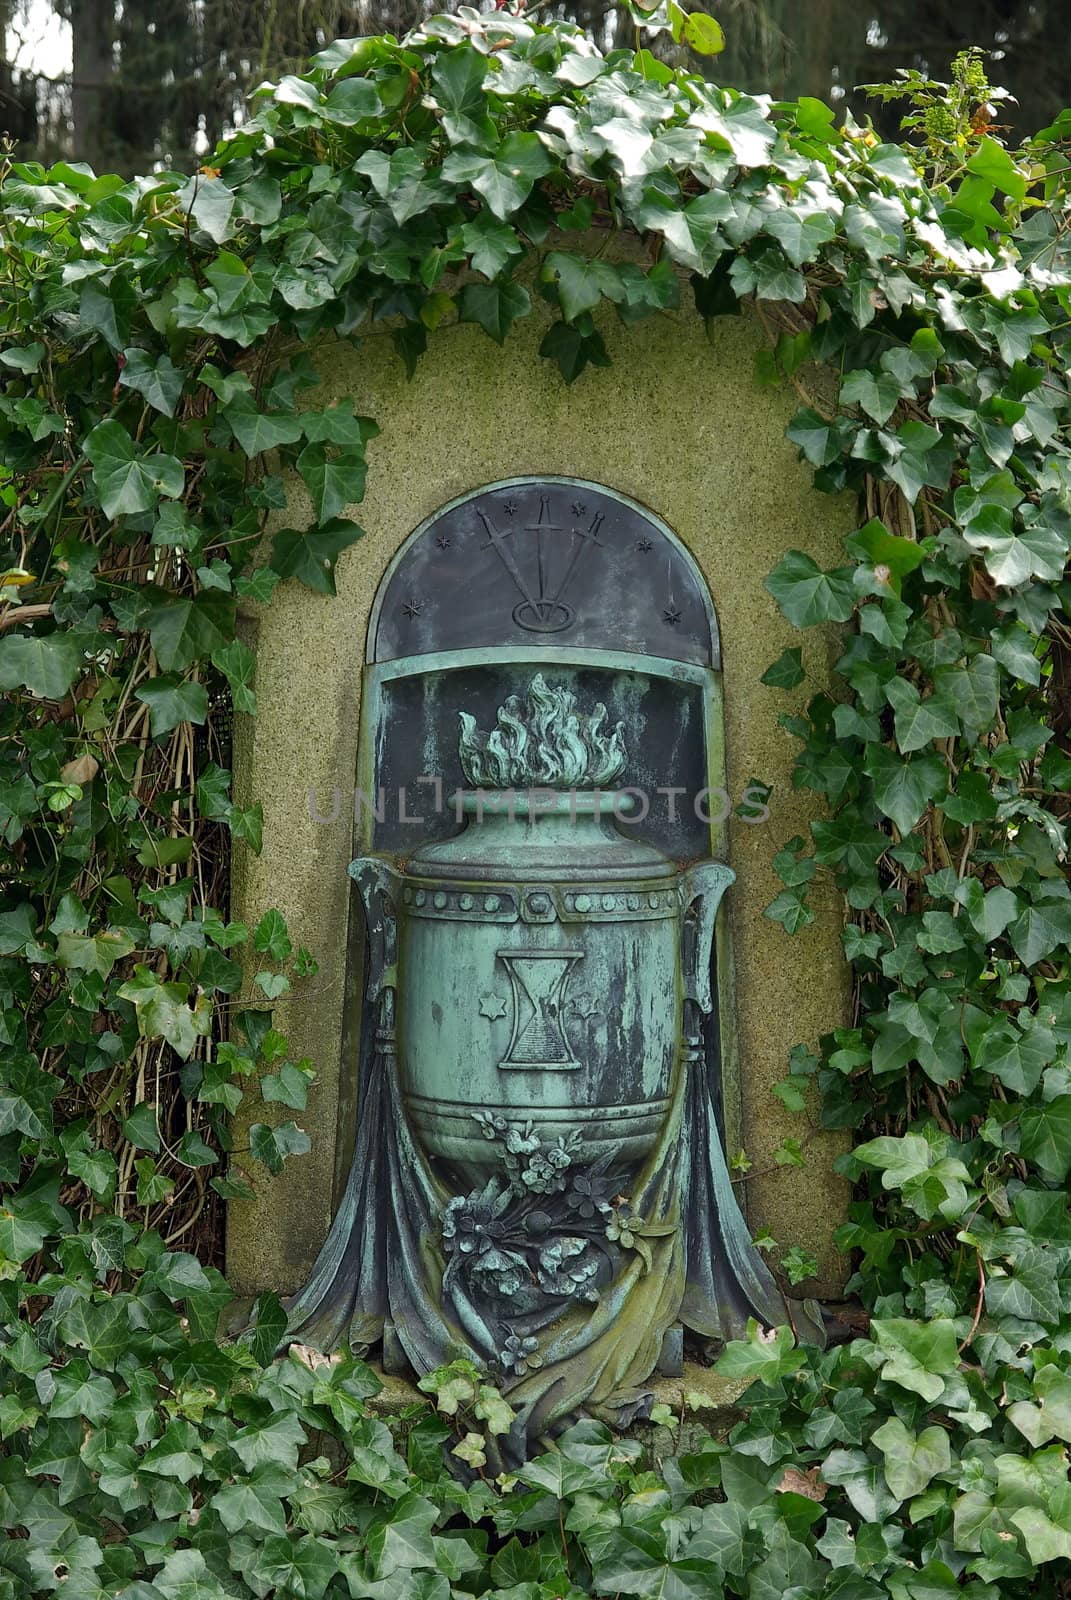 Age gravestone urn motif with